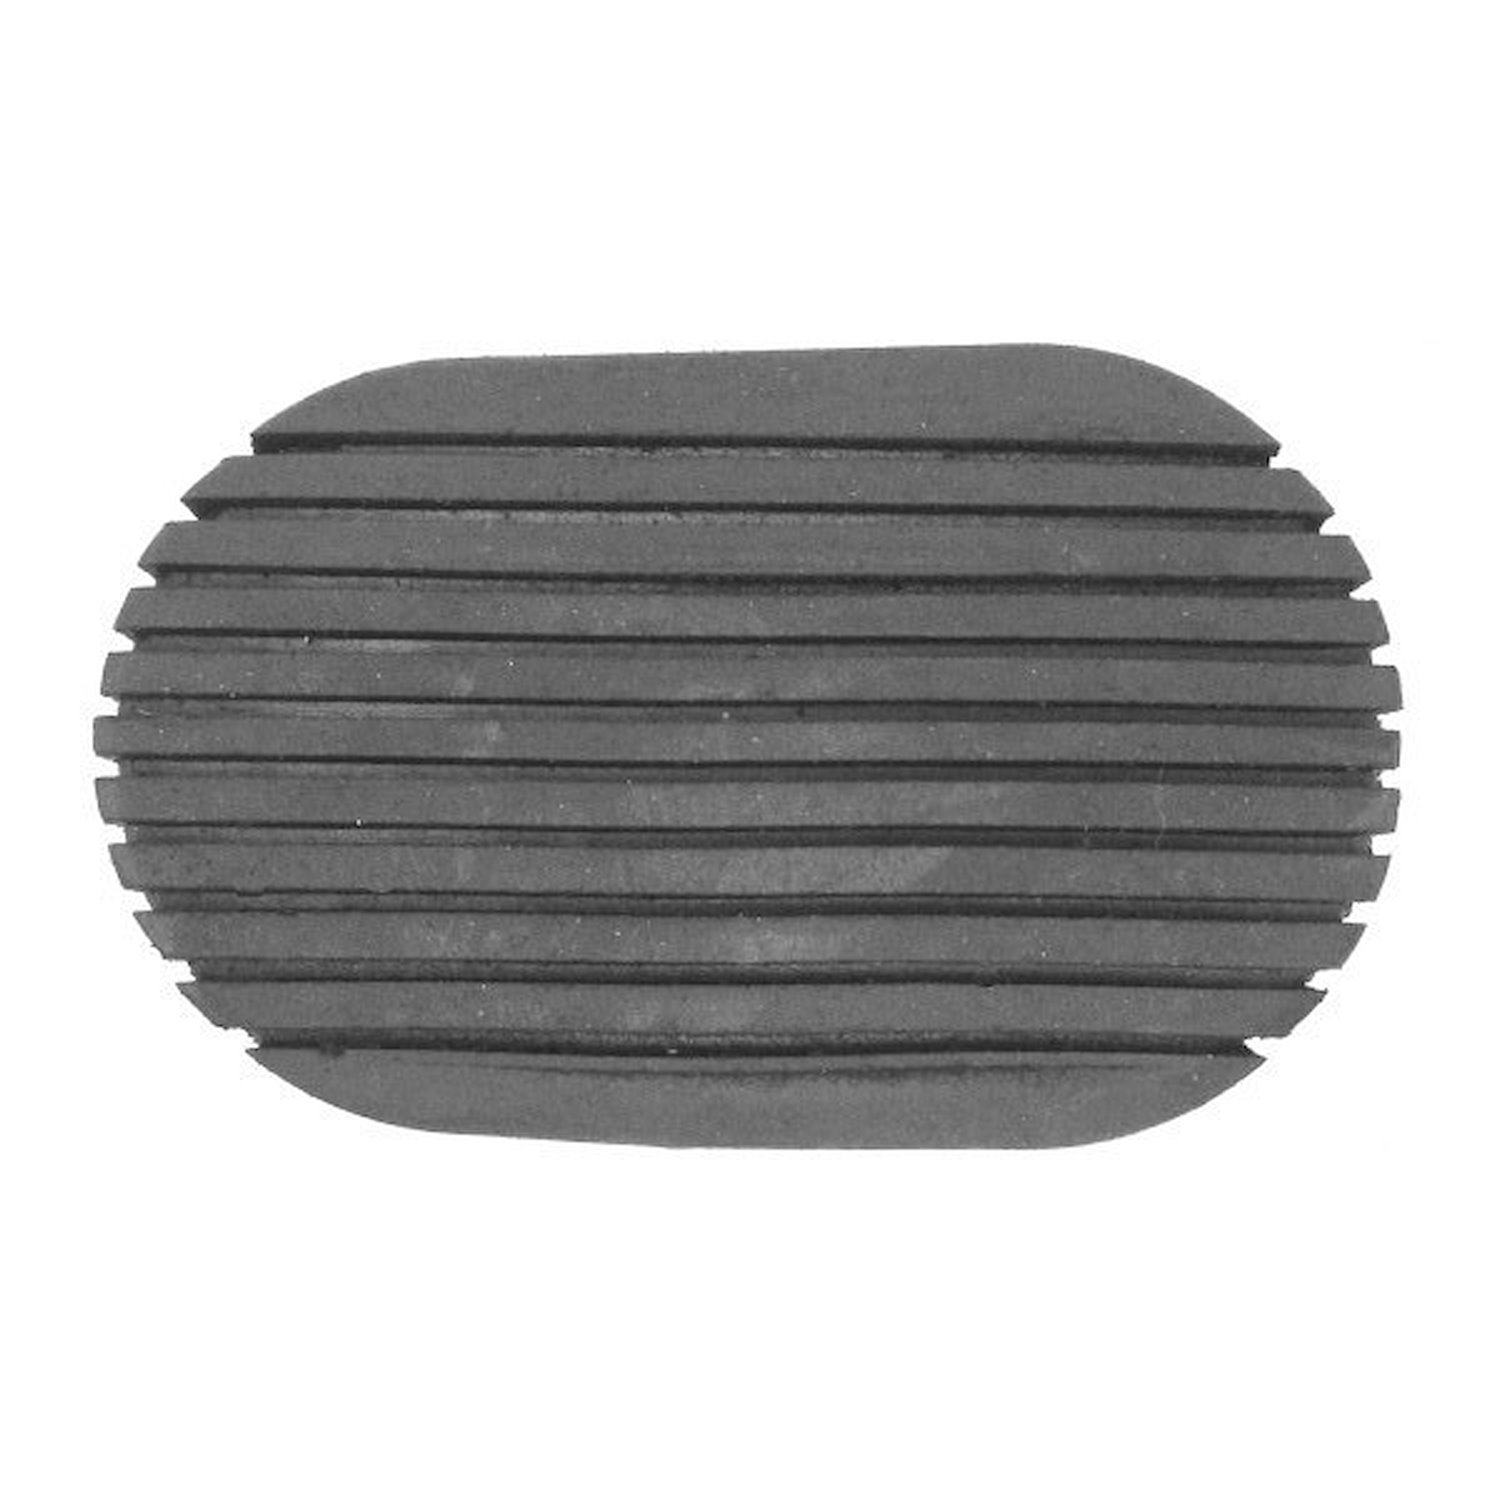 Clutch or Brake Pedal Pad